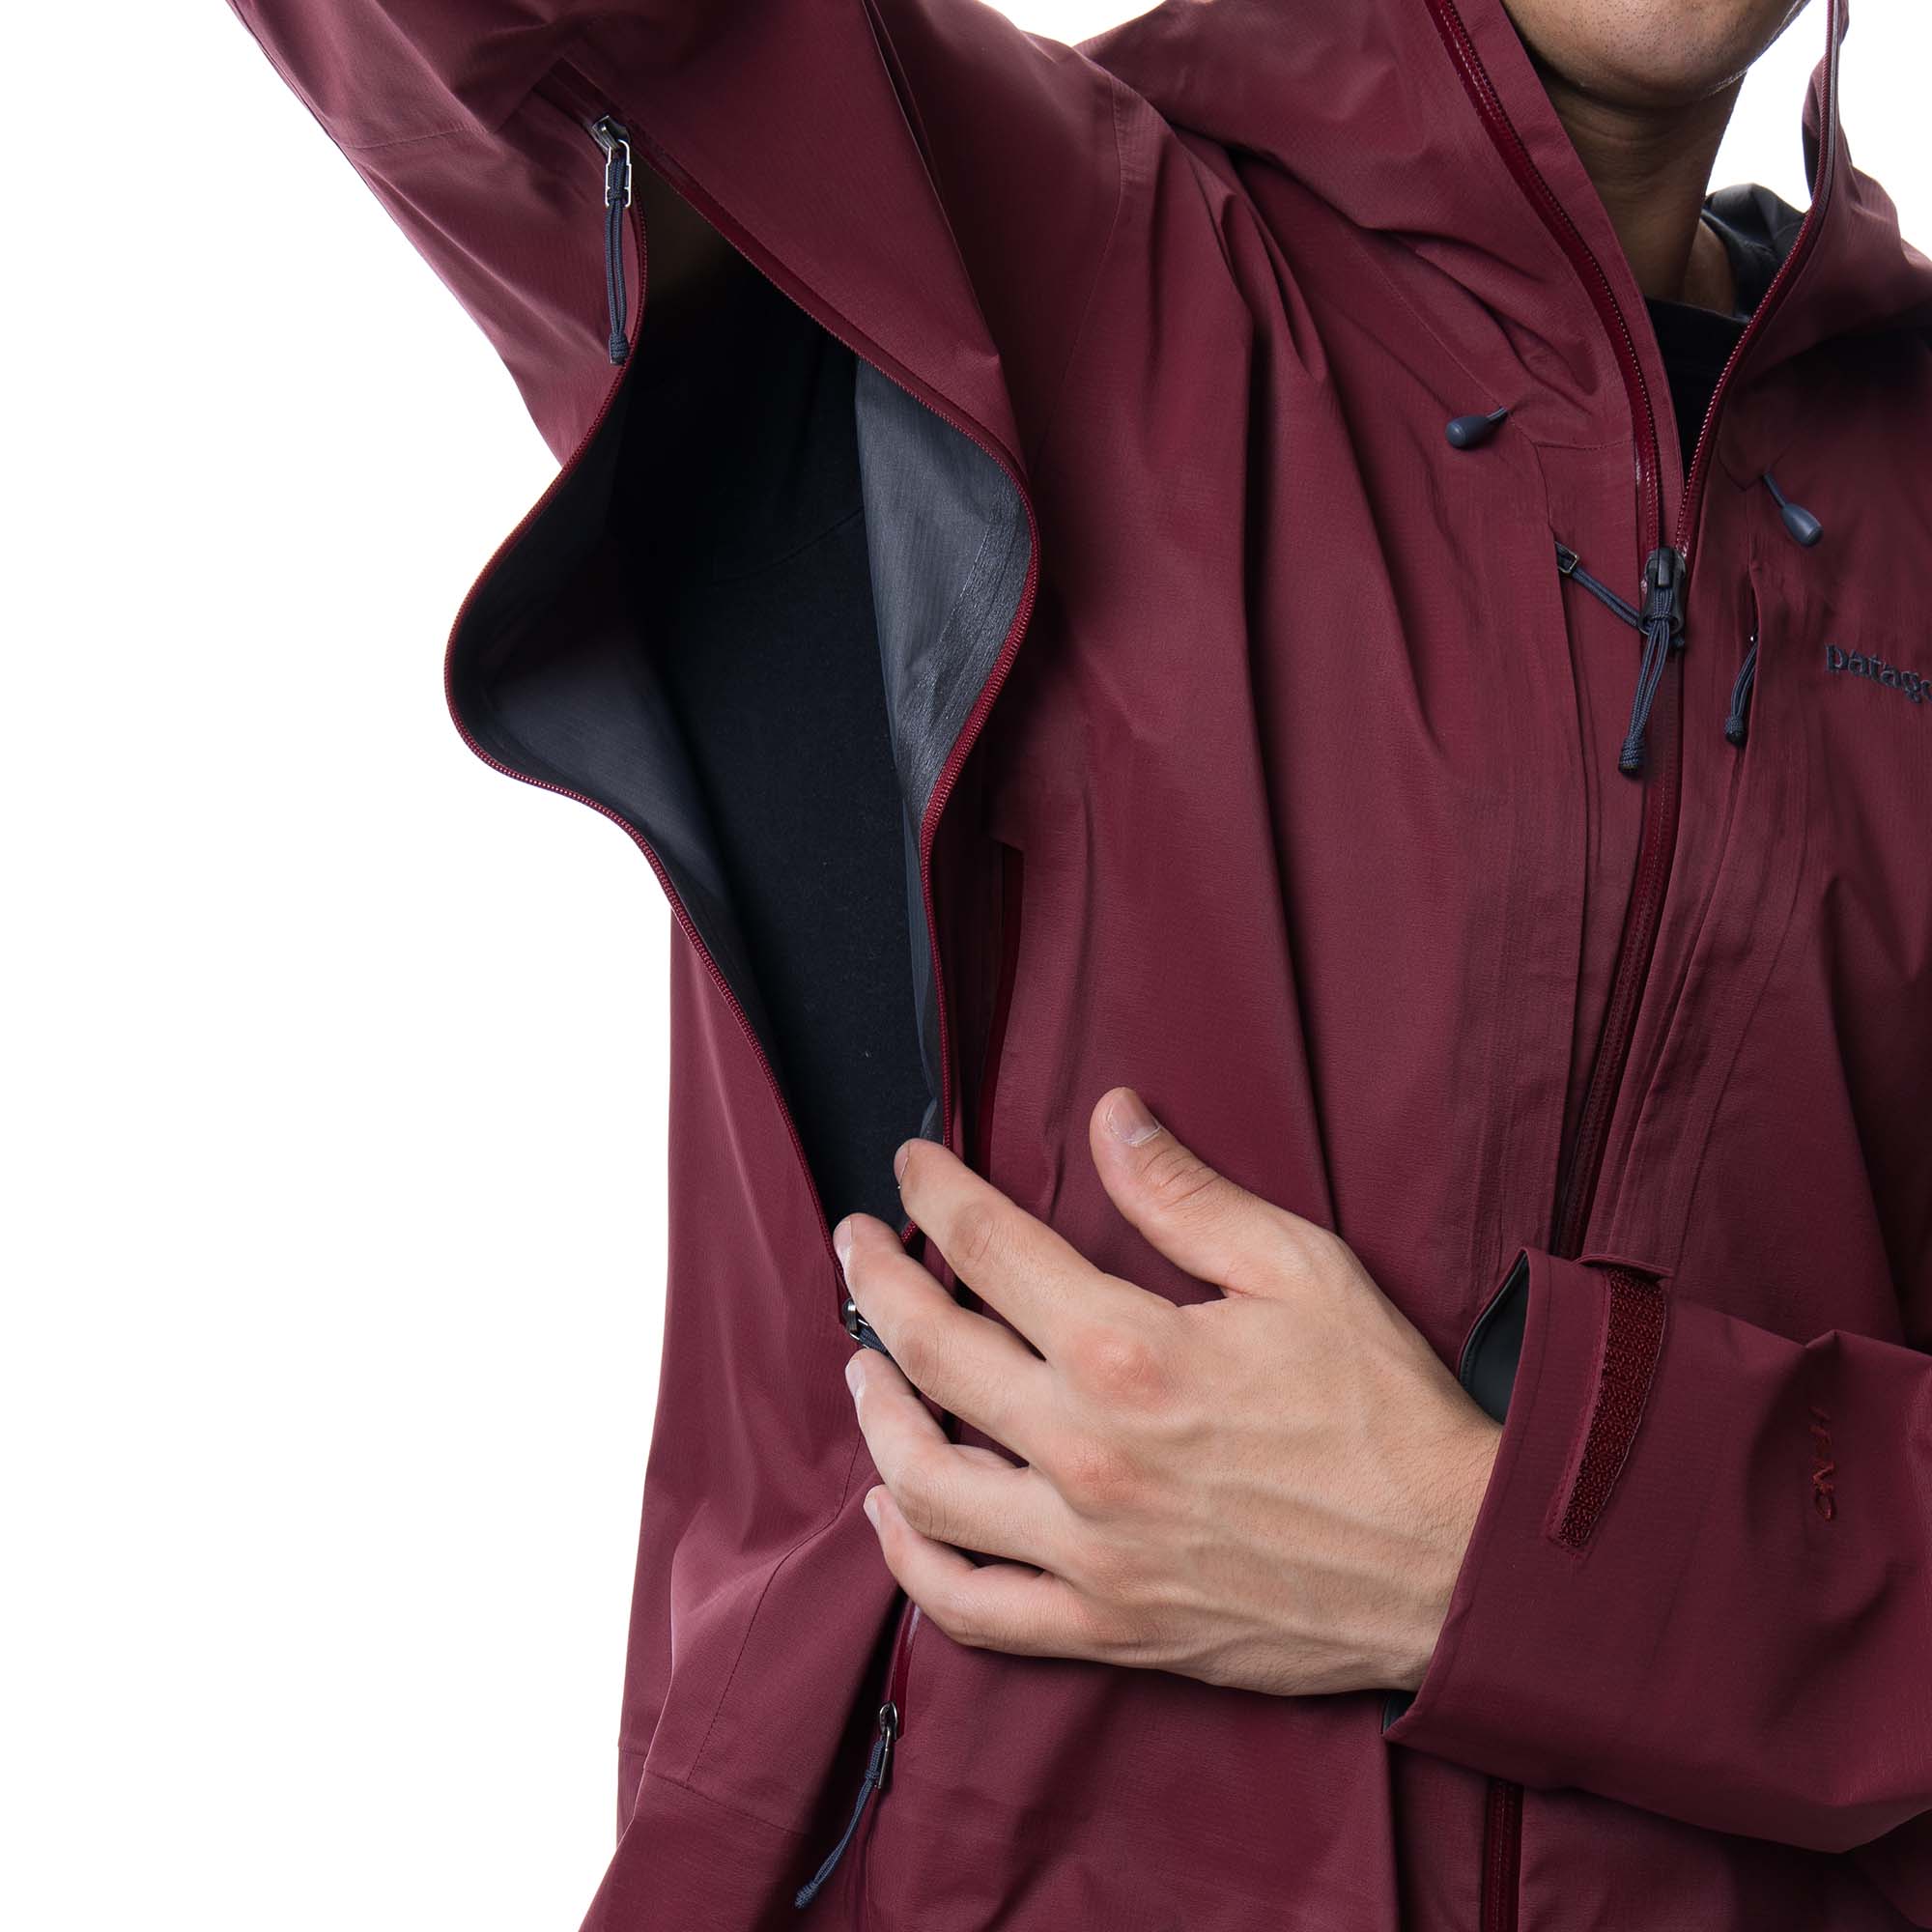 Patagonia Dual Aspect Men's Waterproof Jacket